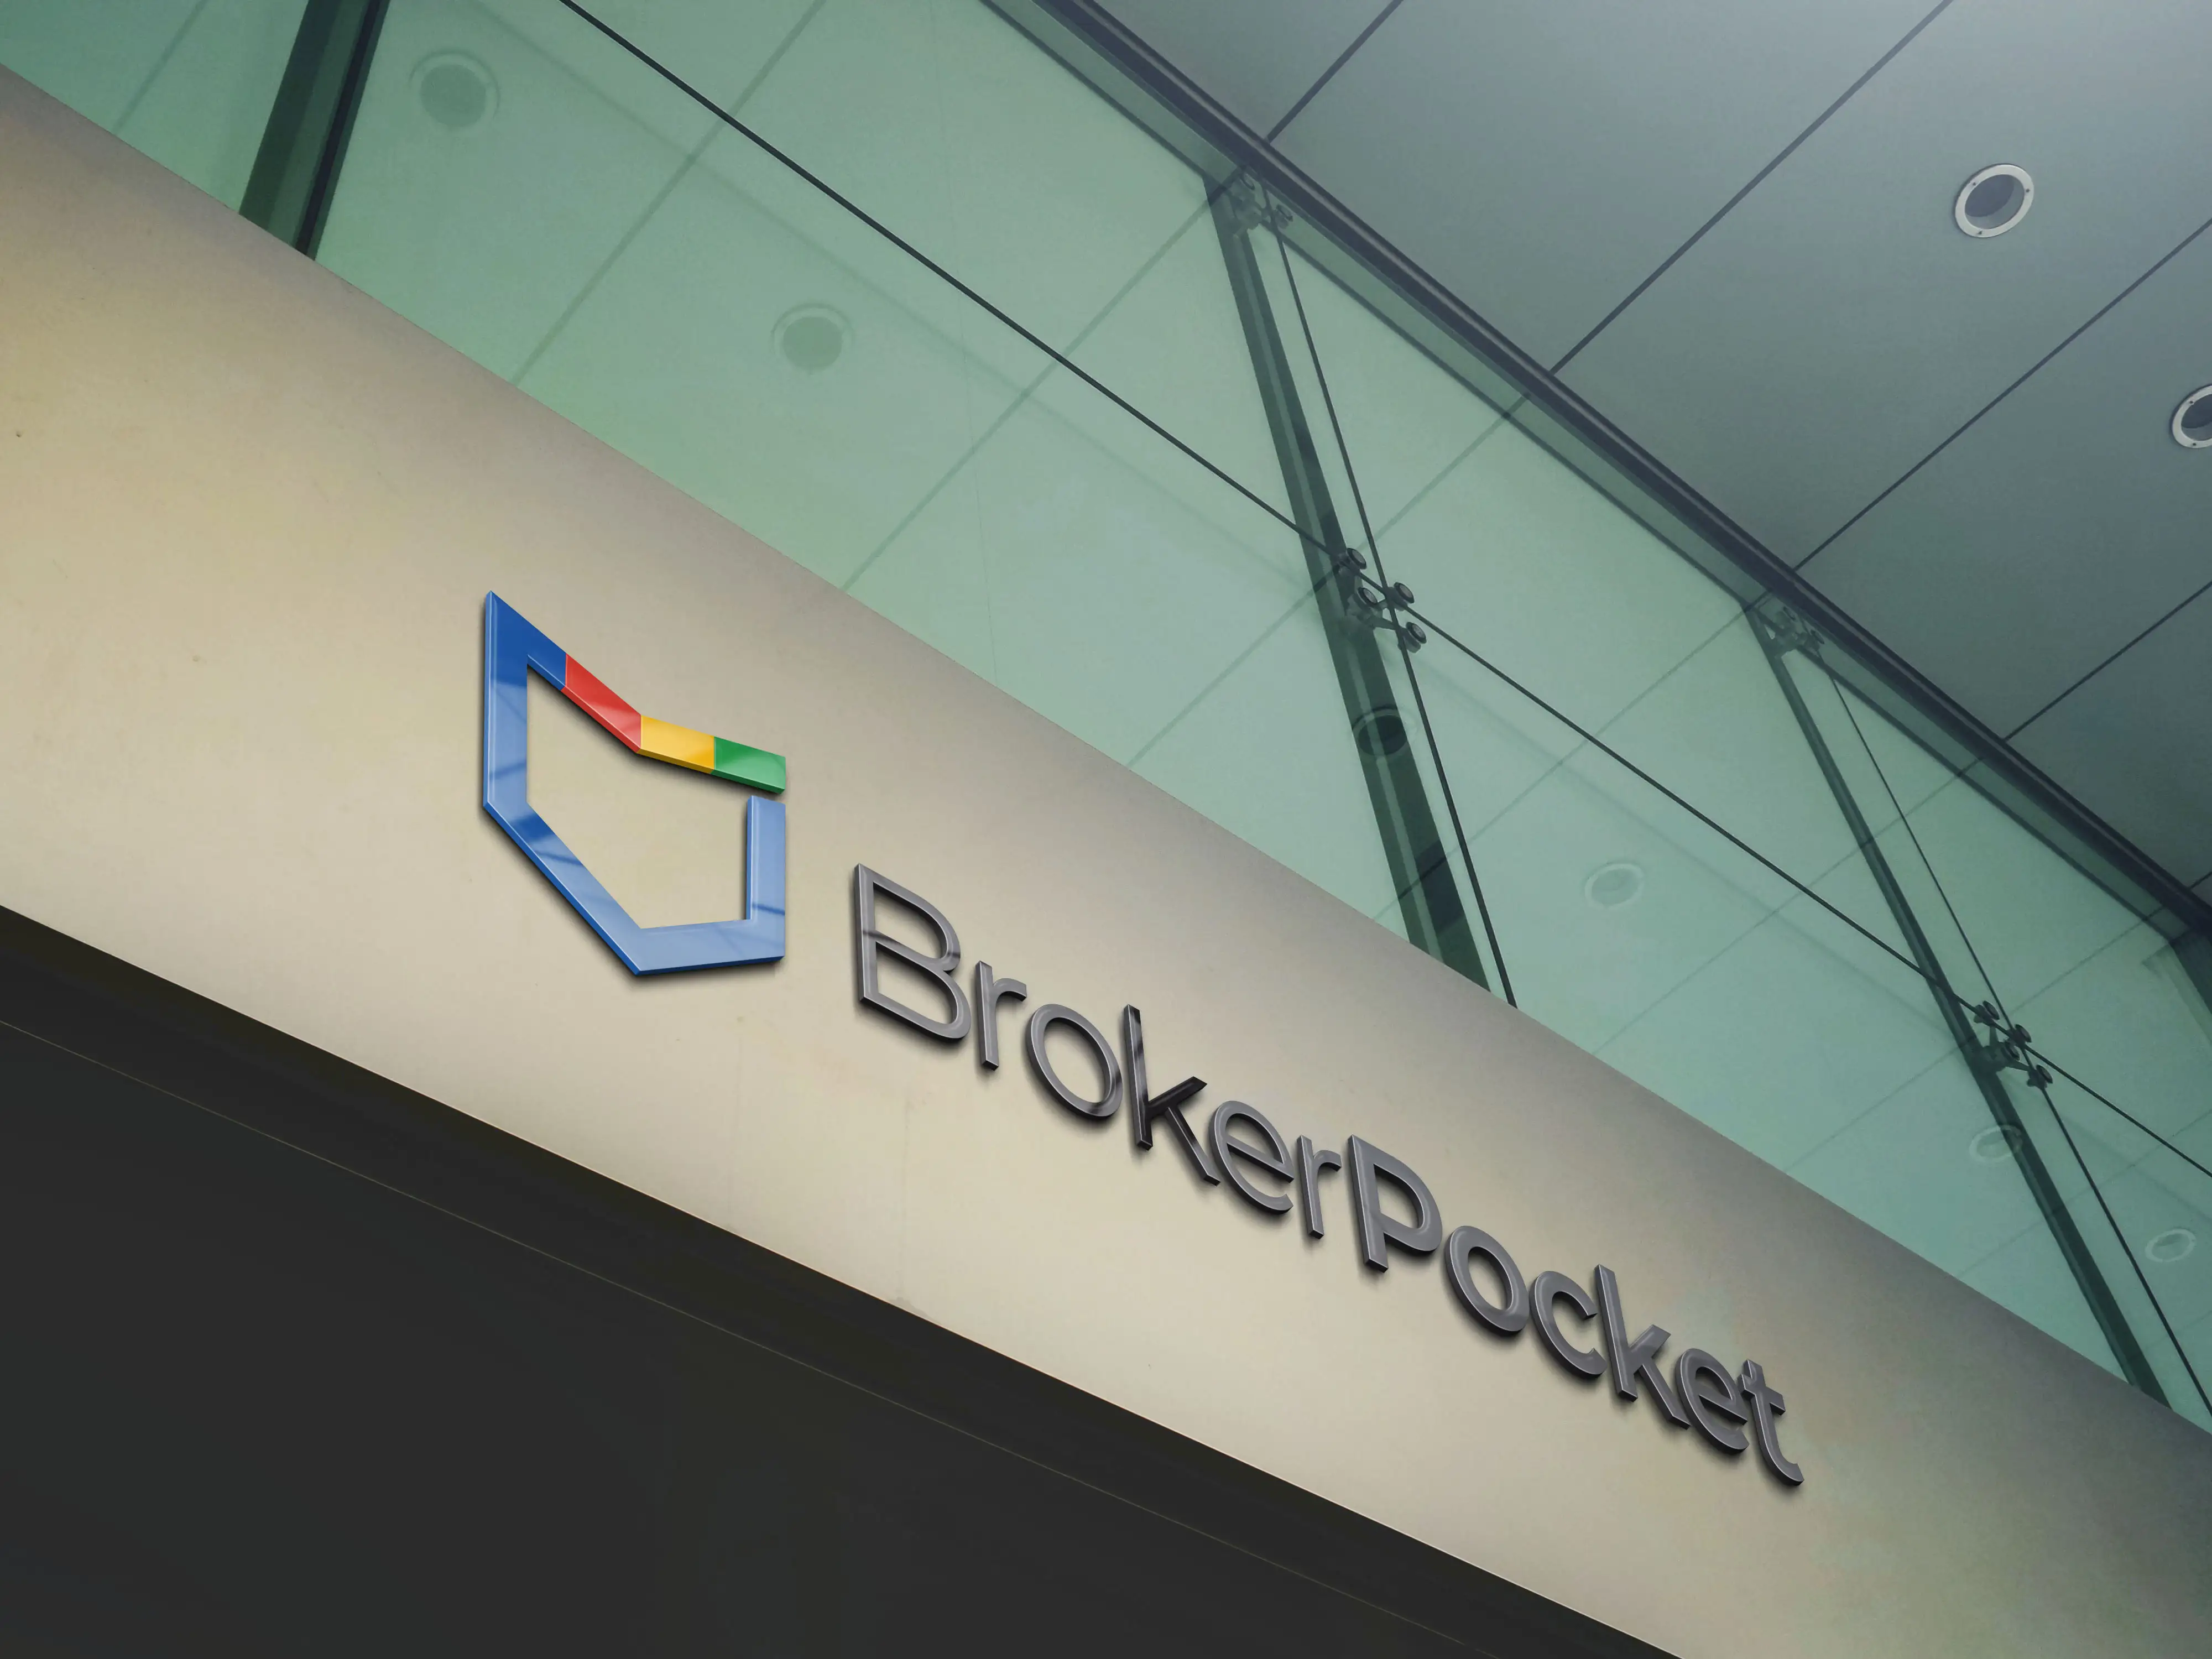 BrokerPocket lanched 2.0 on the new platform